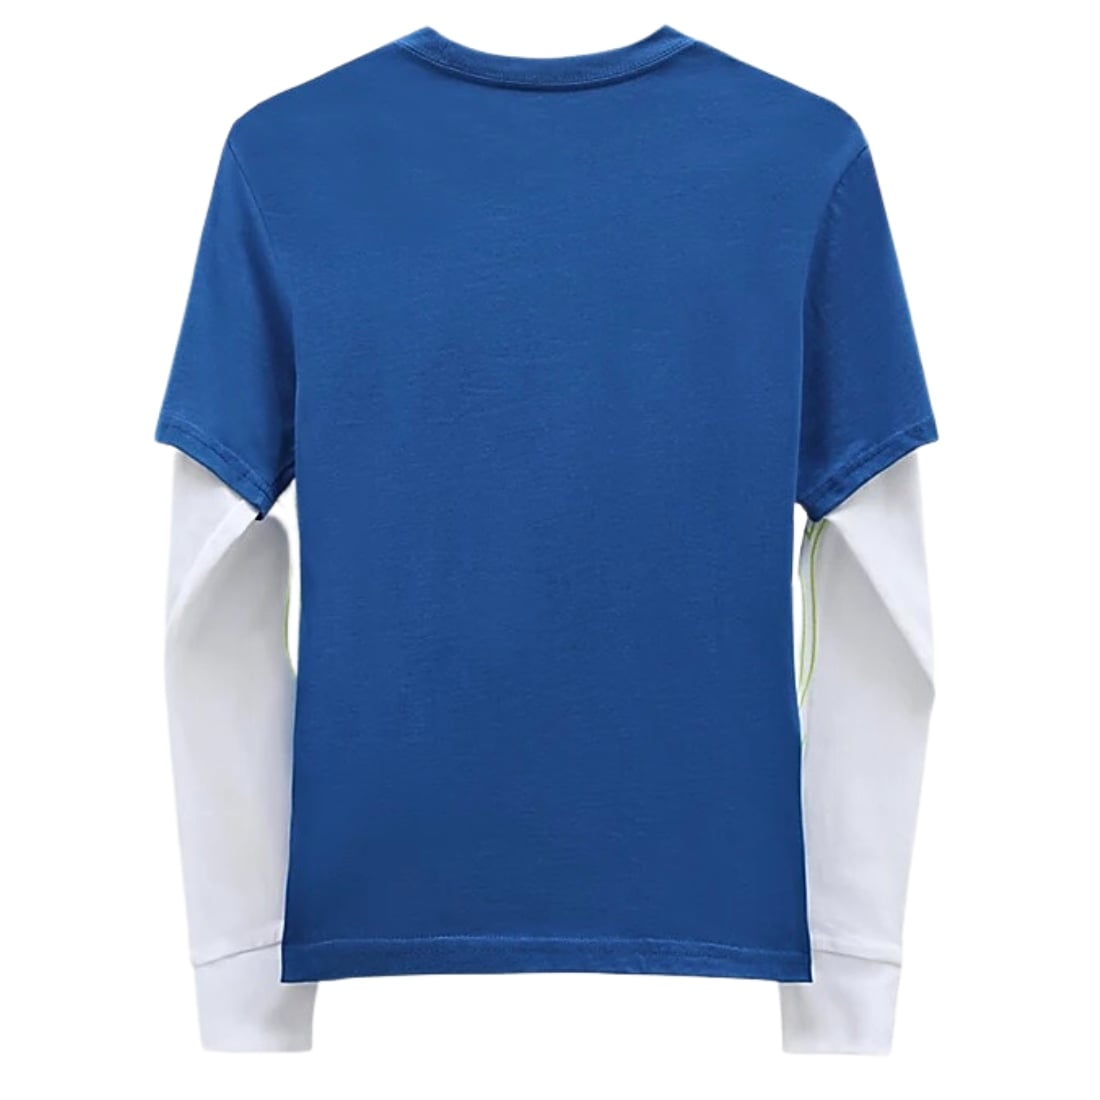 Vans Kids Neon Flames Twofer Longsleeve T-Shirt - True Blue